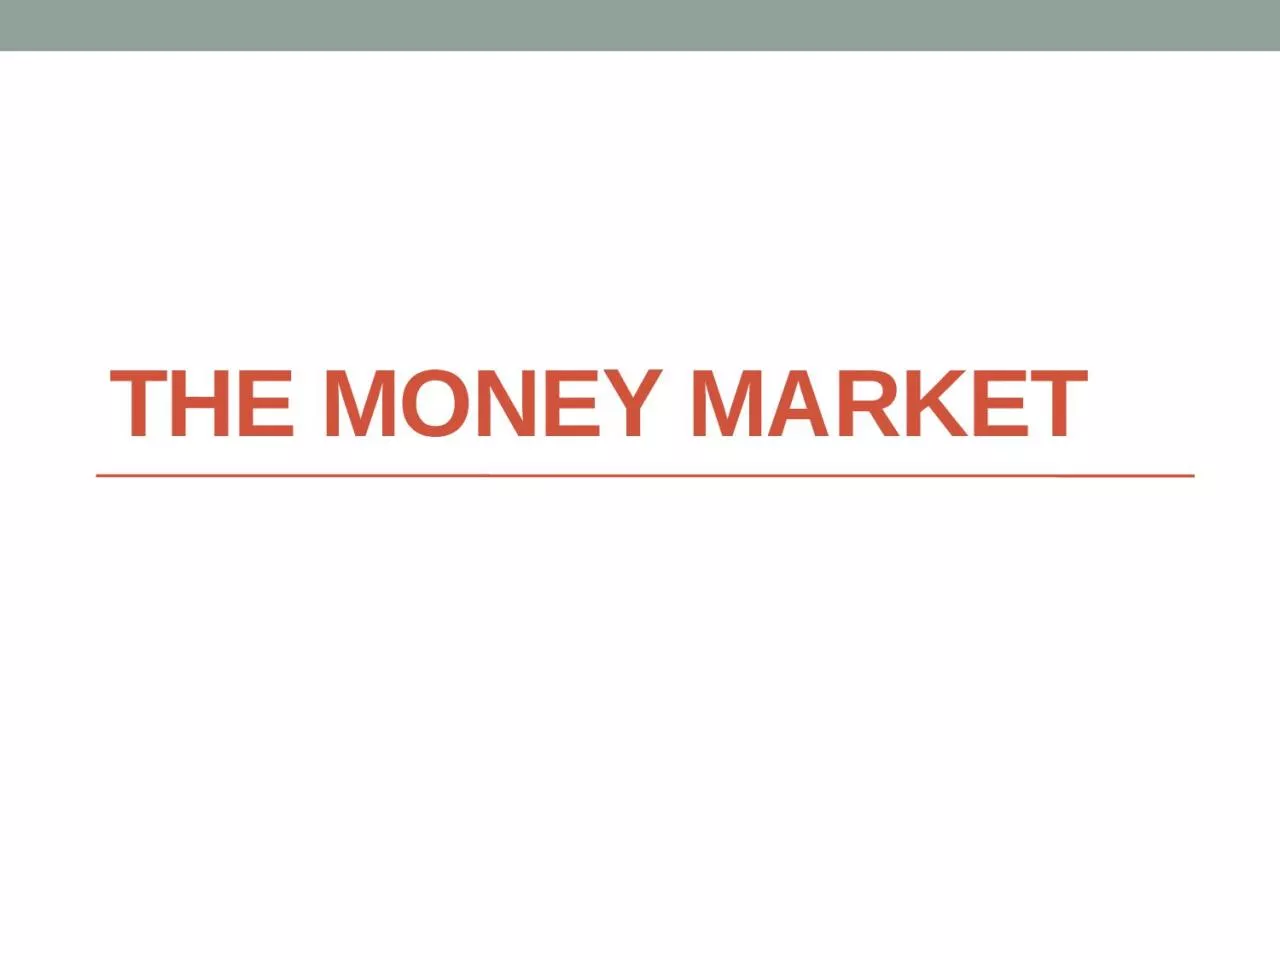 The Money Market Objectives